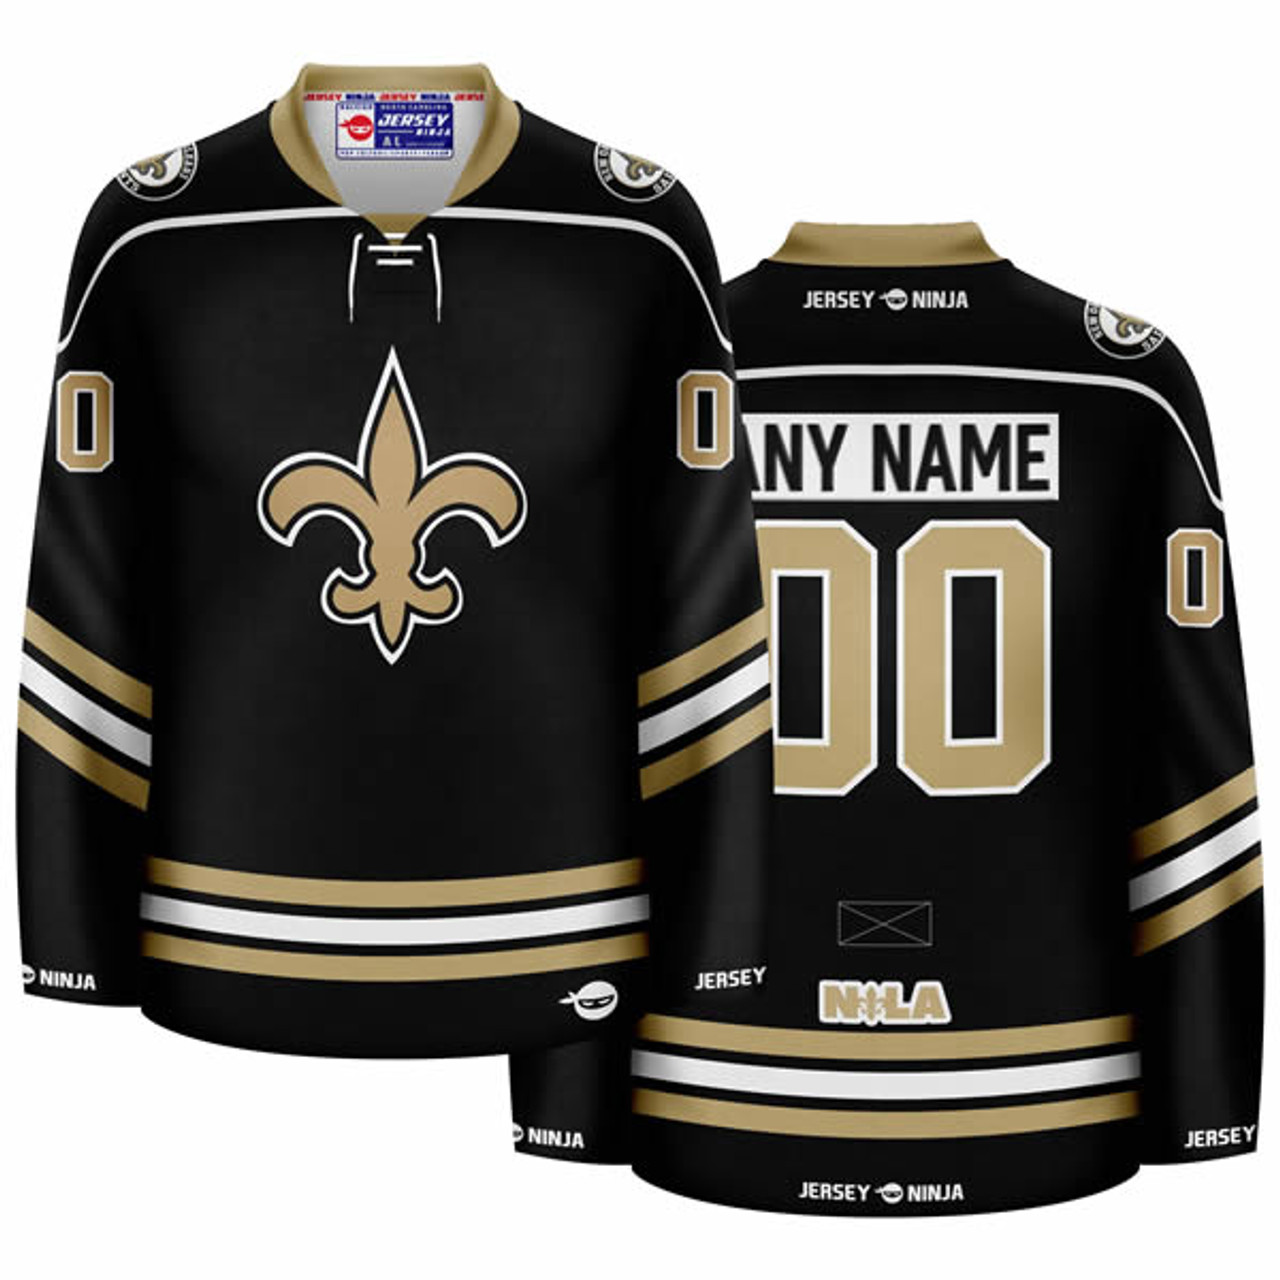 Jersey Ninja - New Orleans Saints White Hockey Jersey